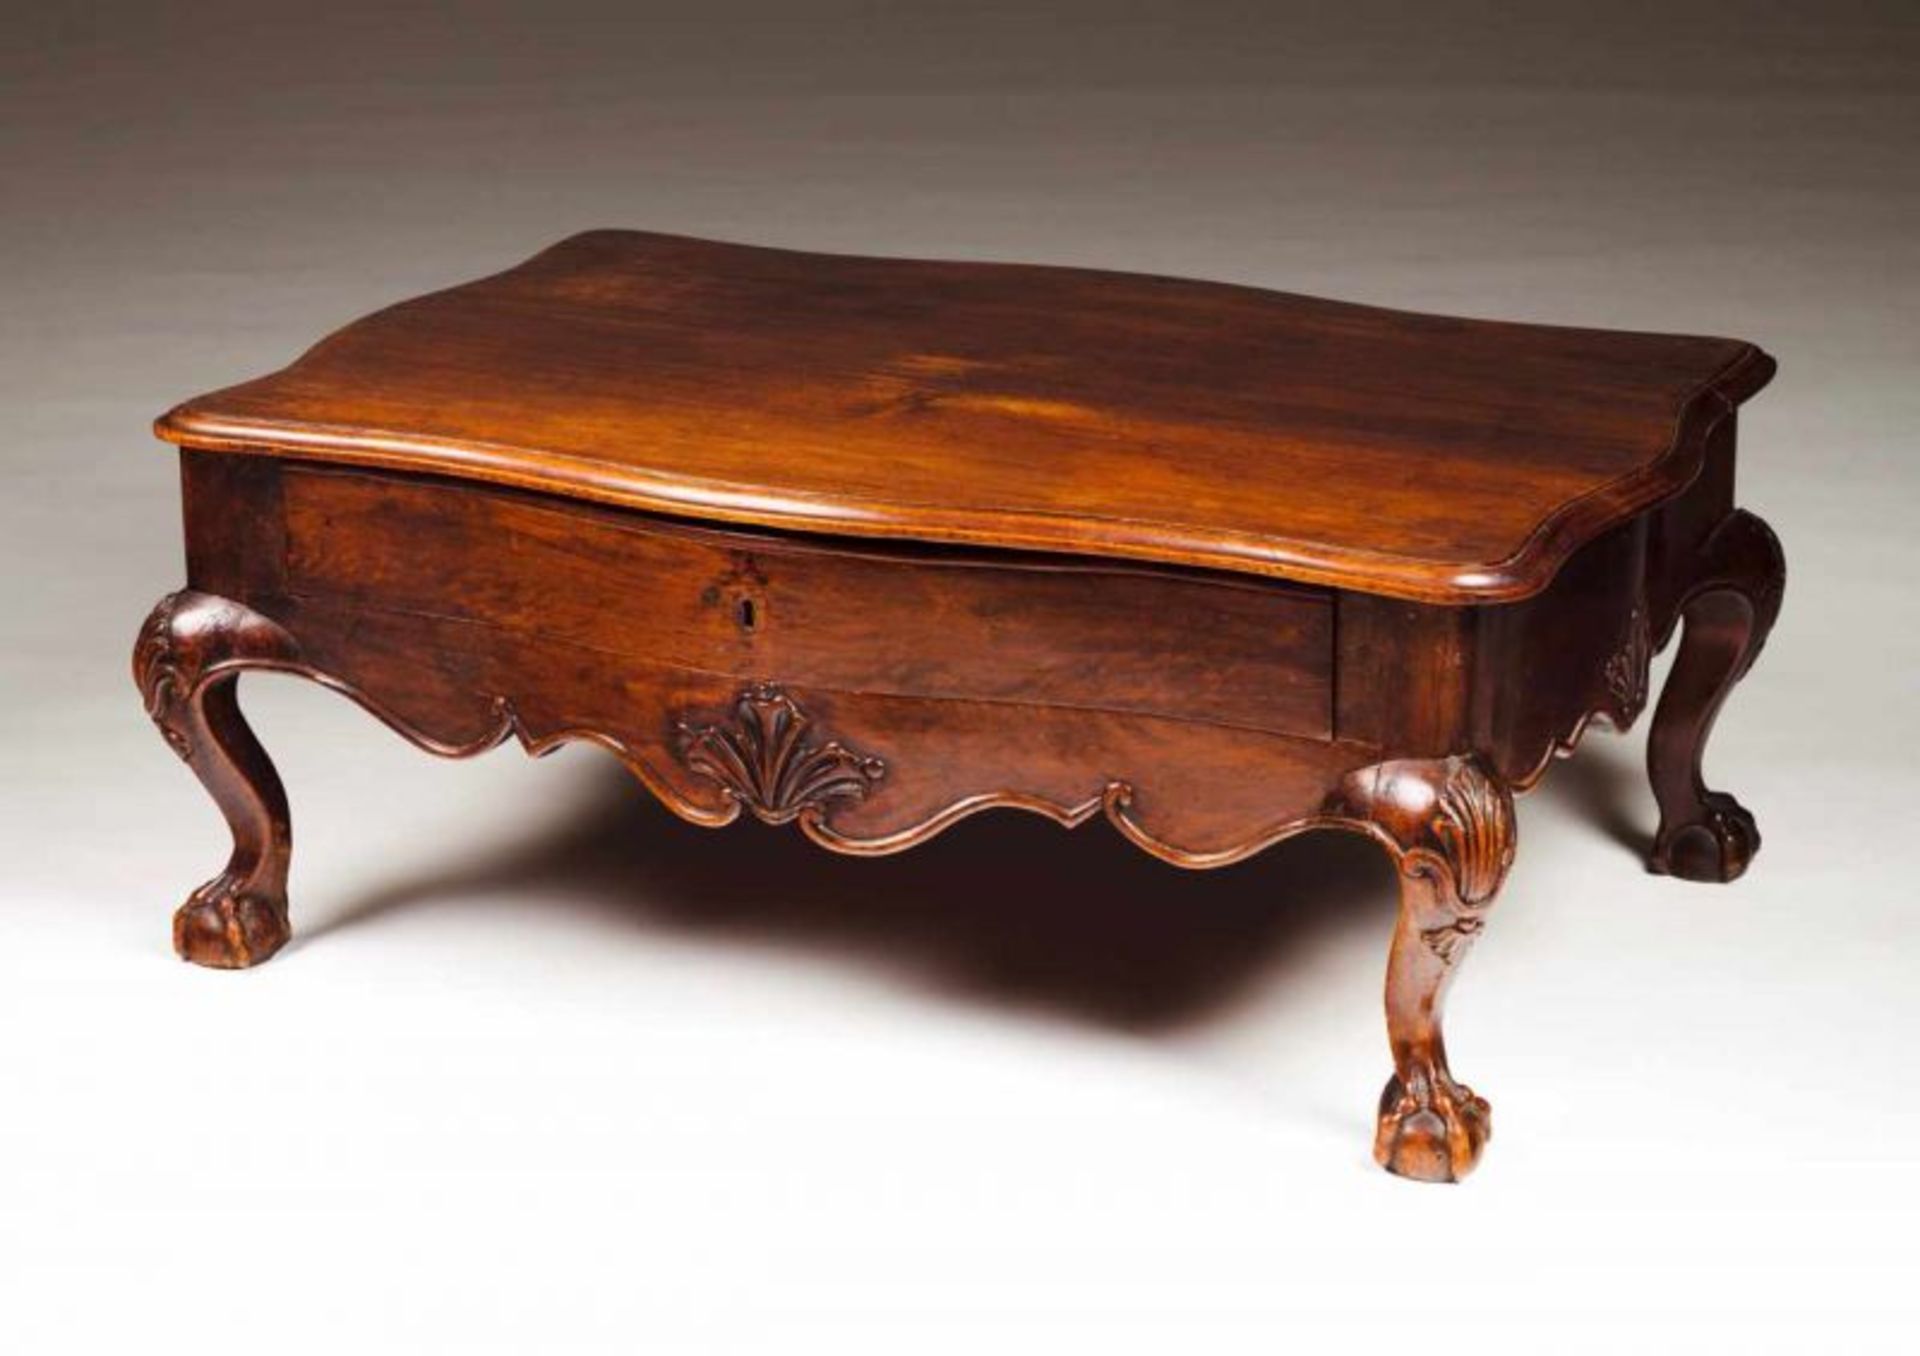 A D. João V (1707-1750)/ D. José (1750-1777) small side table Brazilian mahogany with chestnut top